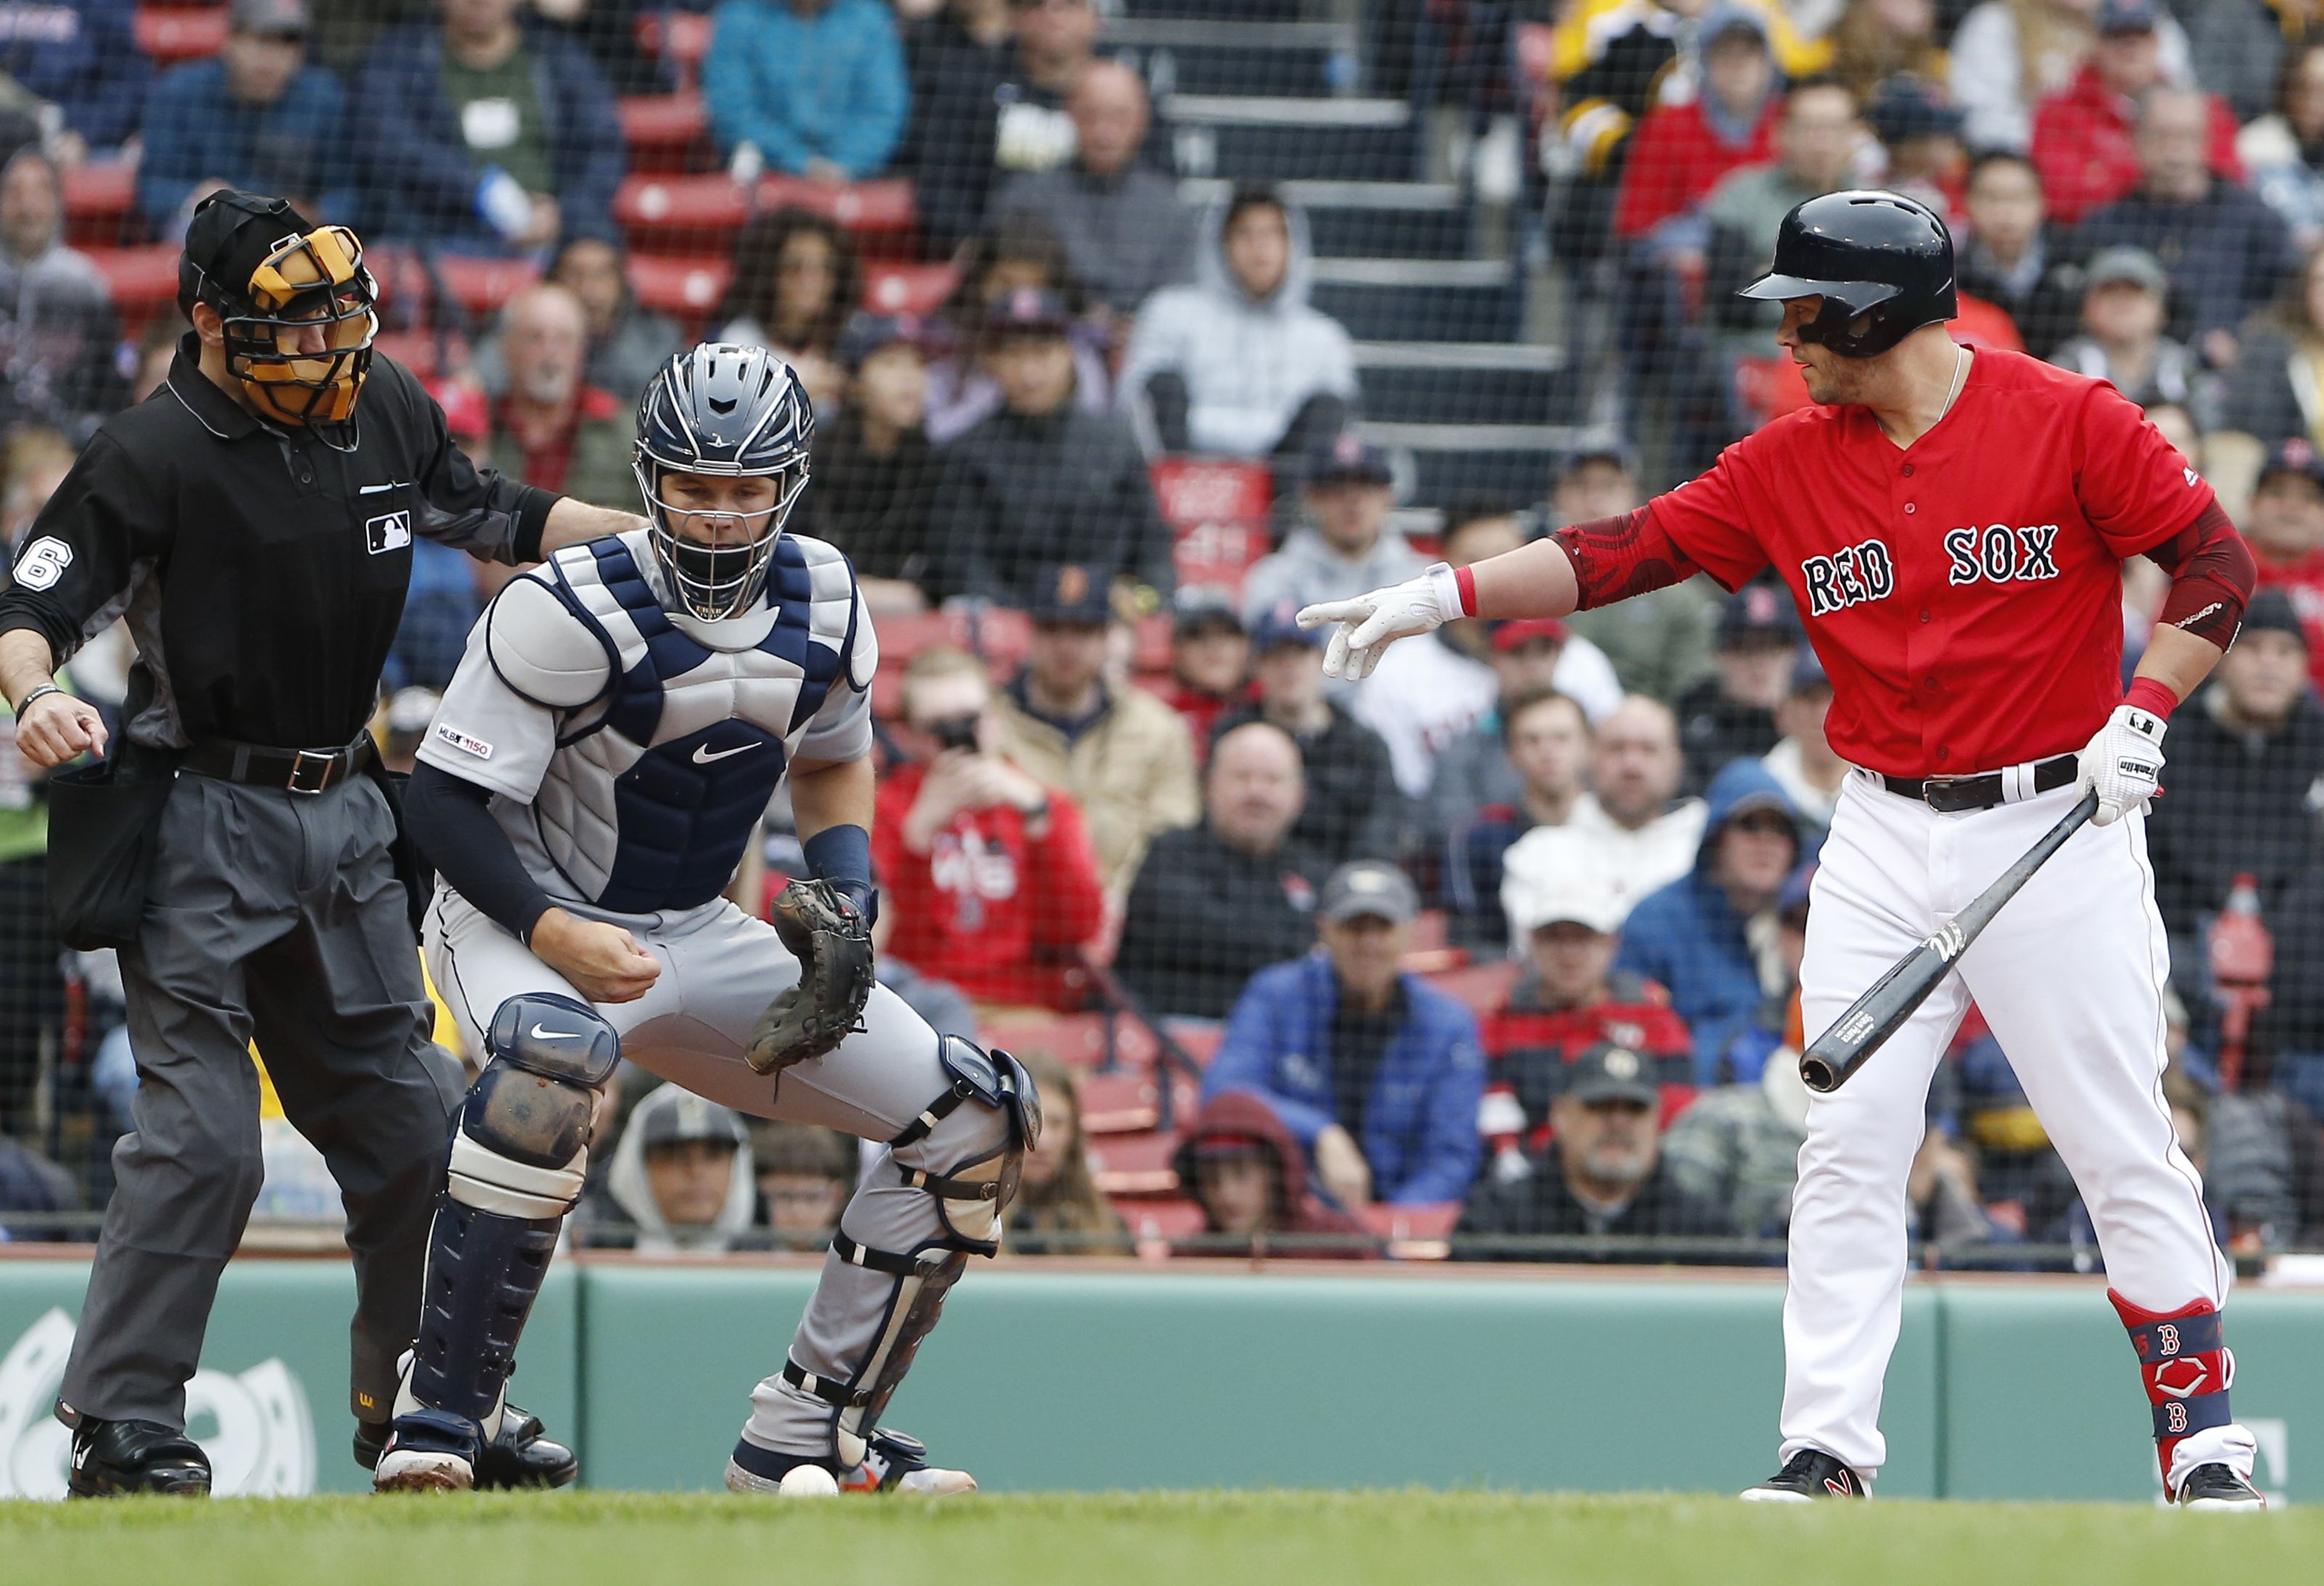 World Series: Red Sox journeyman Steve Pearce adds new label - MVP